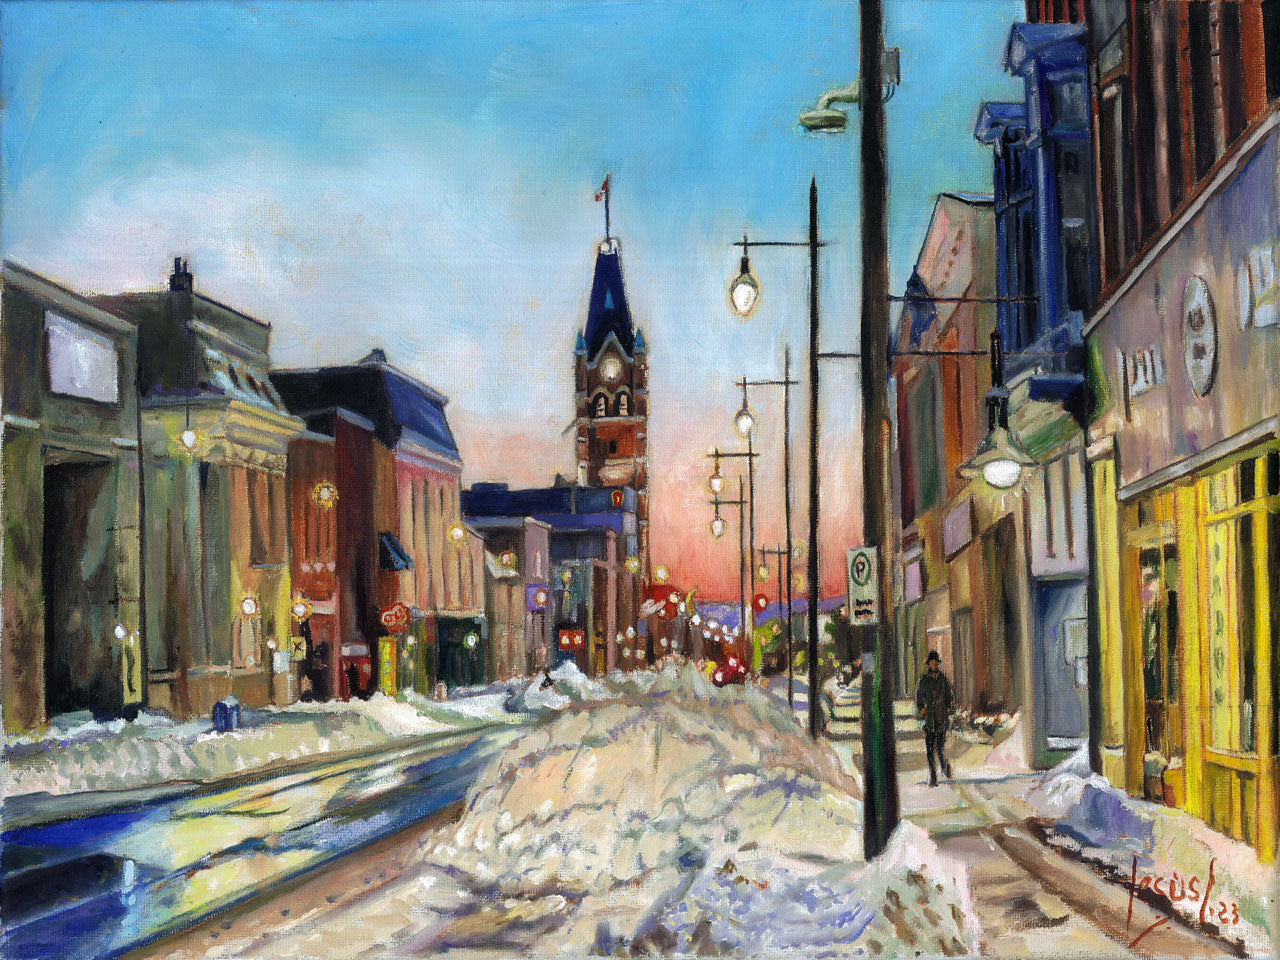 Sunrise Downtown Original oil painting on canvas